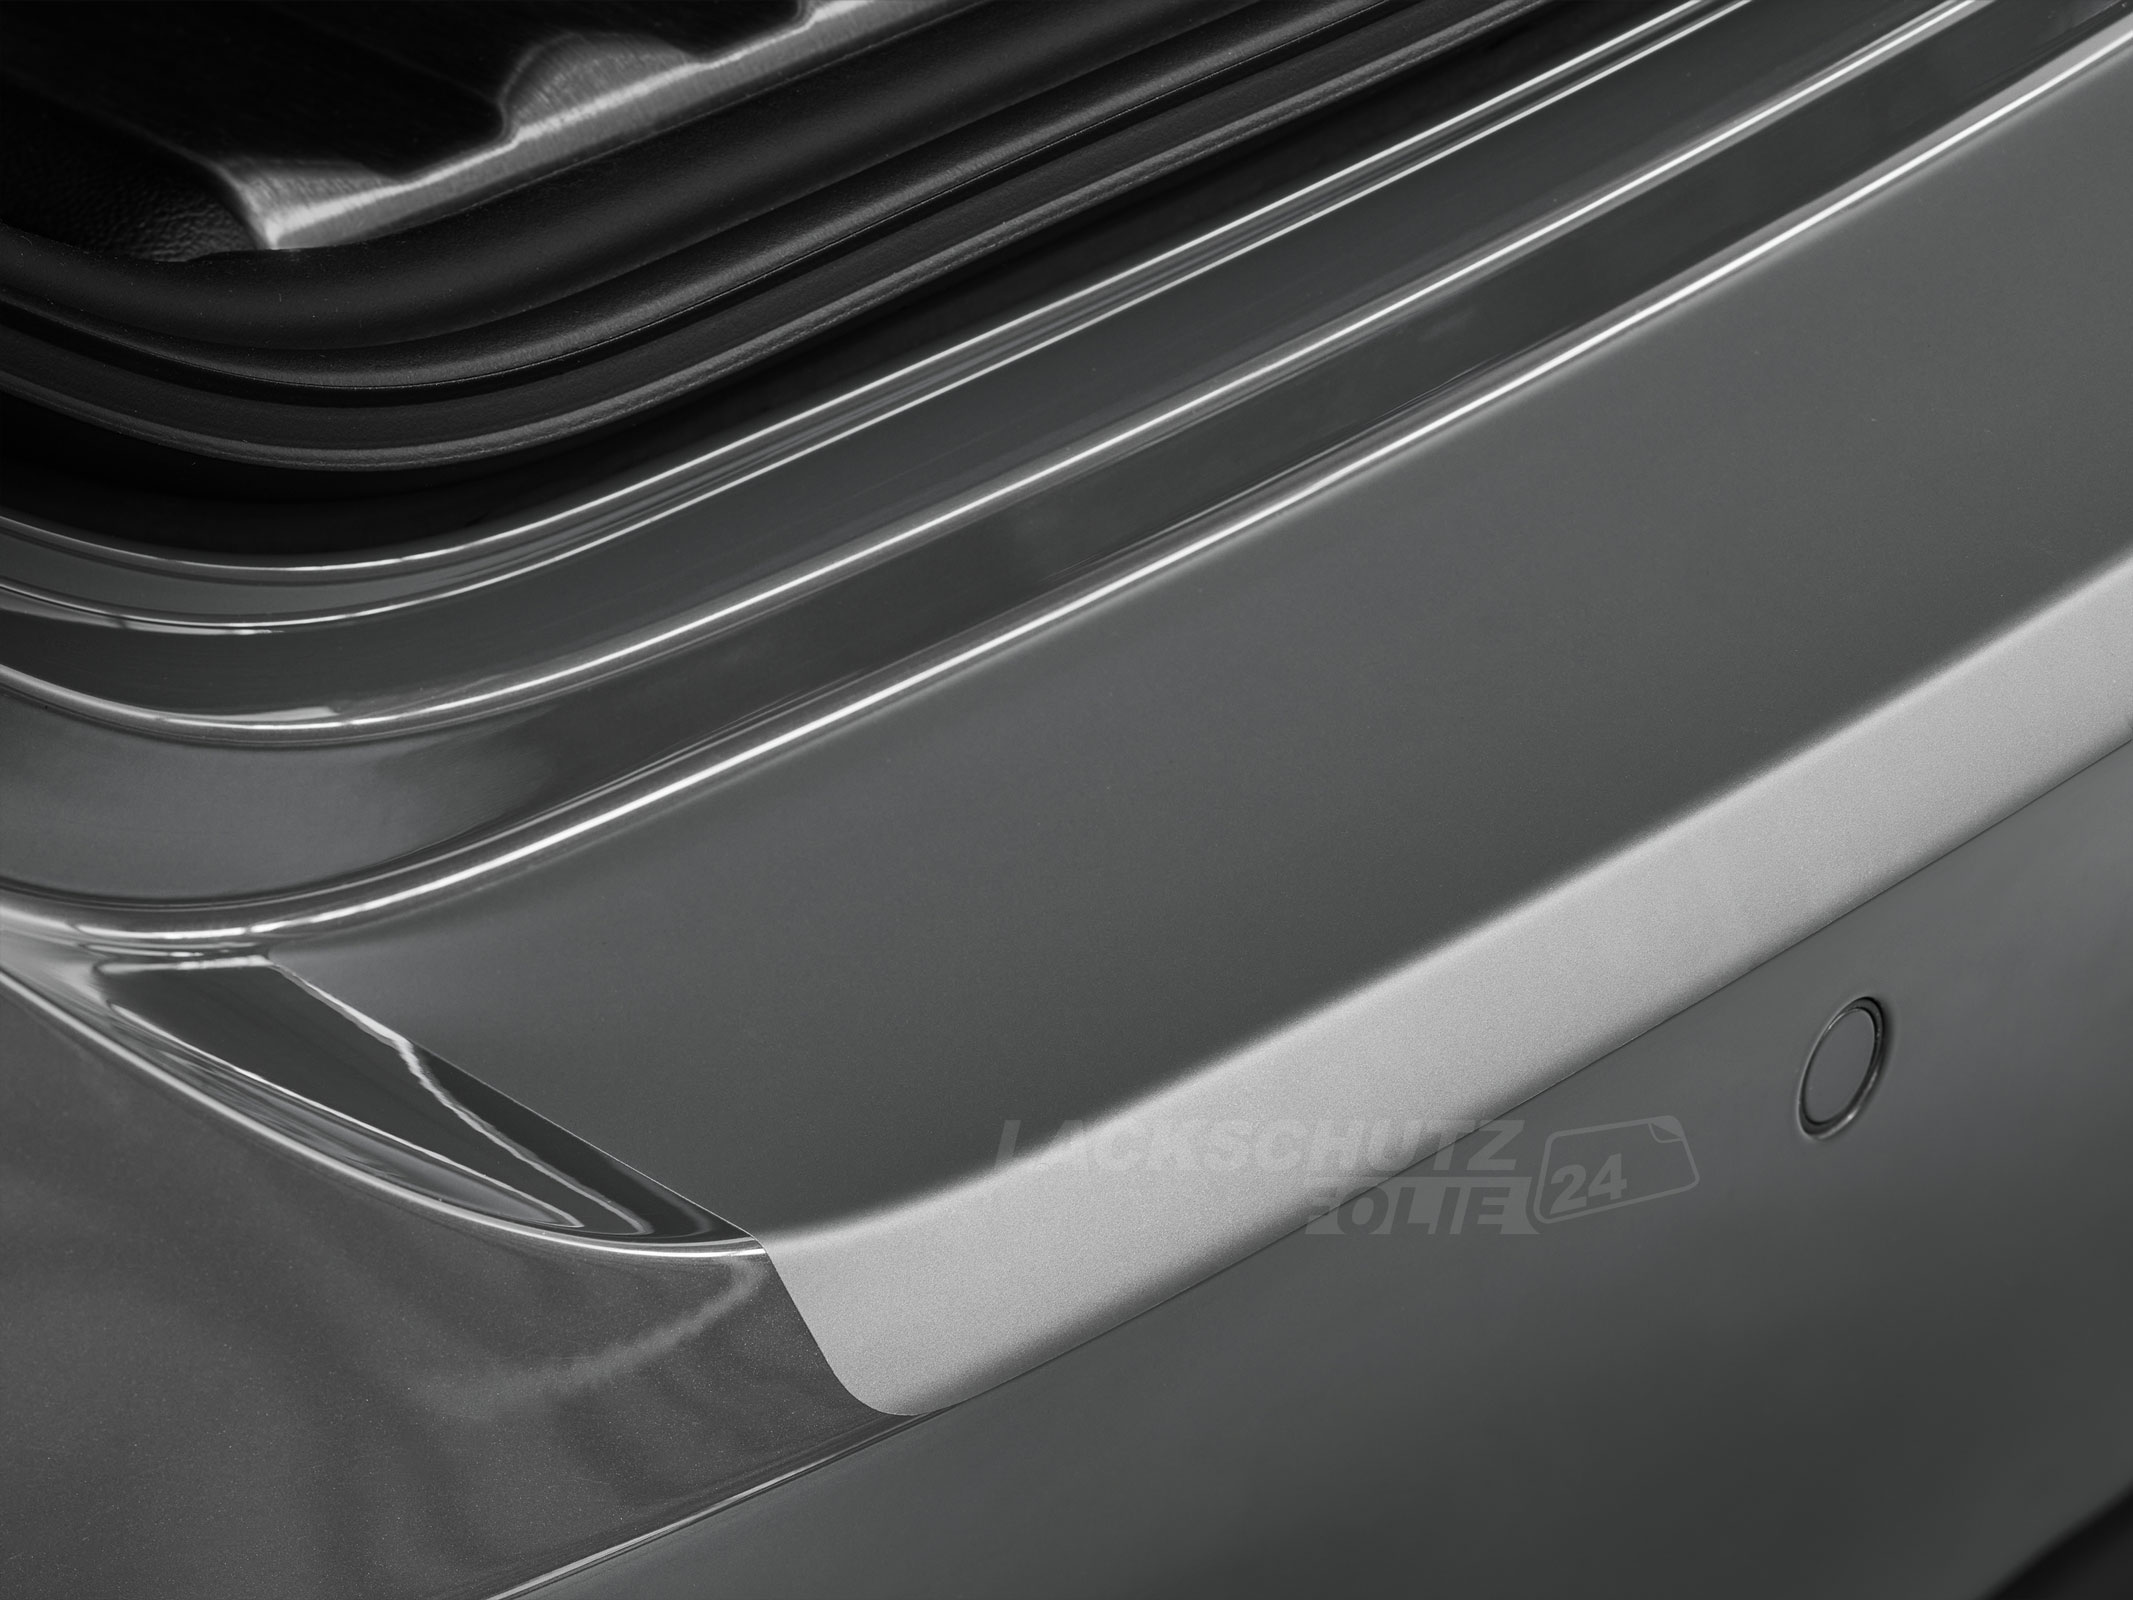 Ladekantenschutzfolie - Transparent Glatt MATT 110 µm stark  für Audi A7 Sportback Typ C8, ab BJ 02/2018